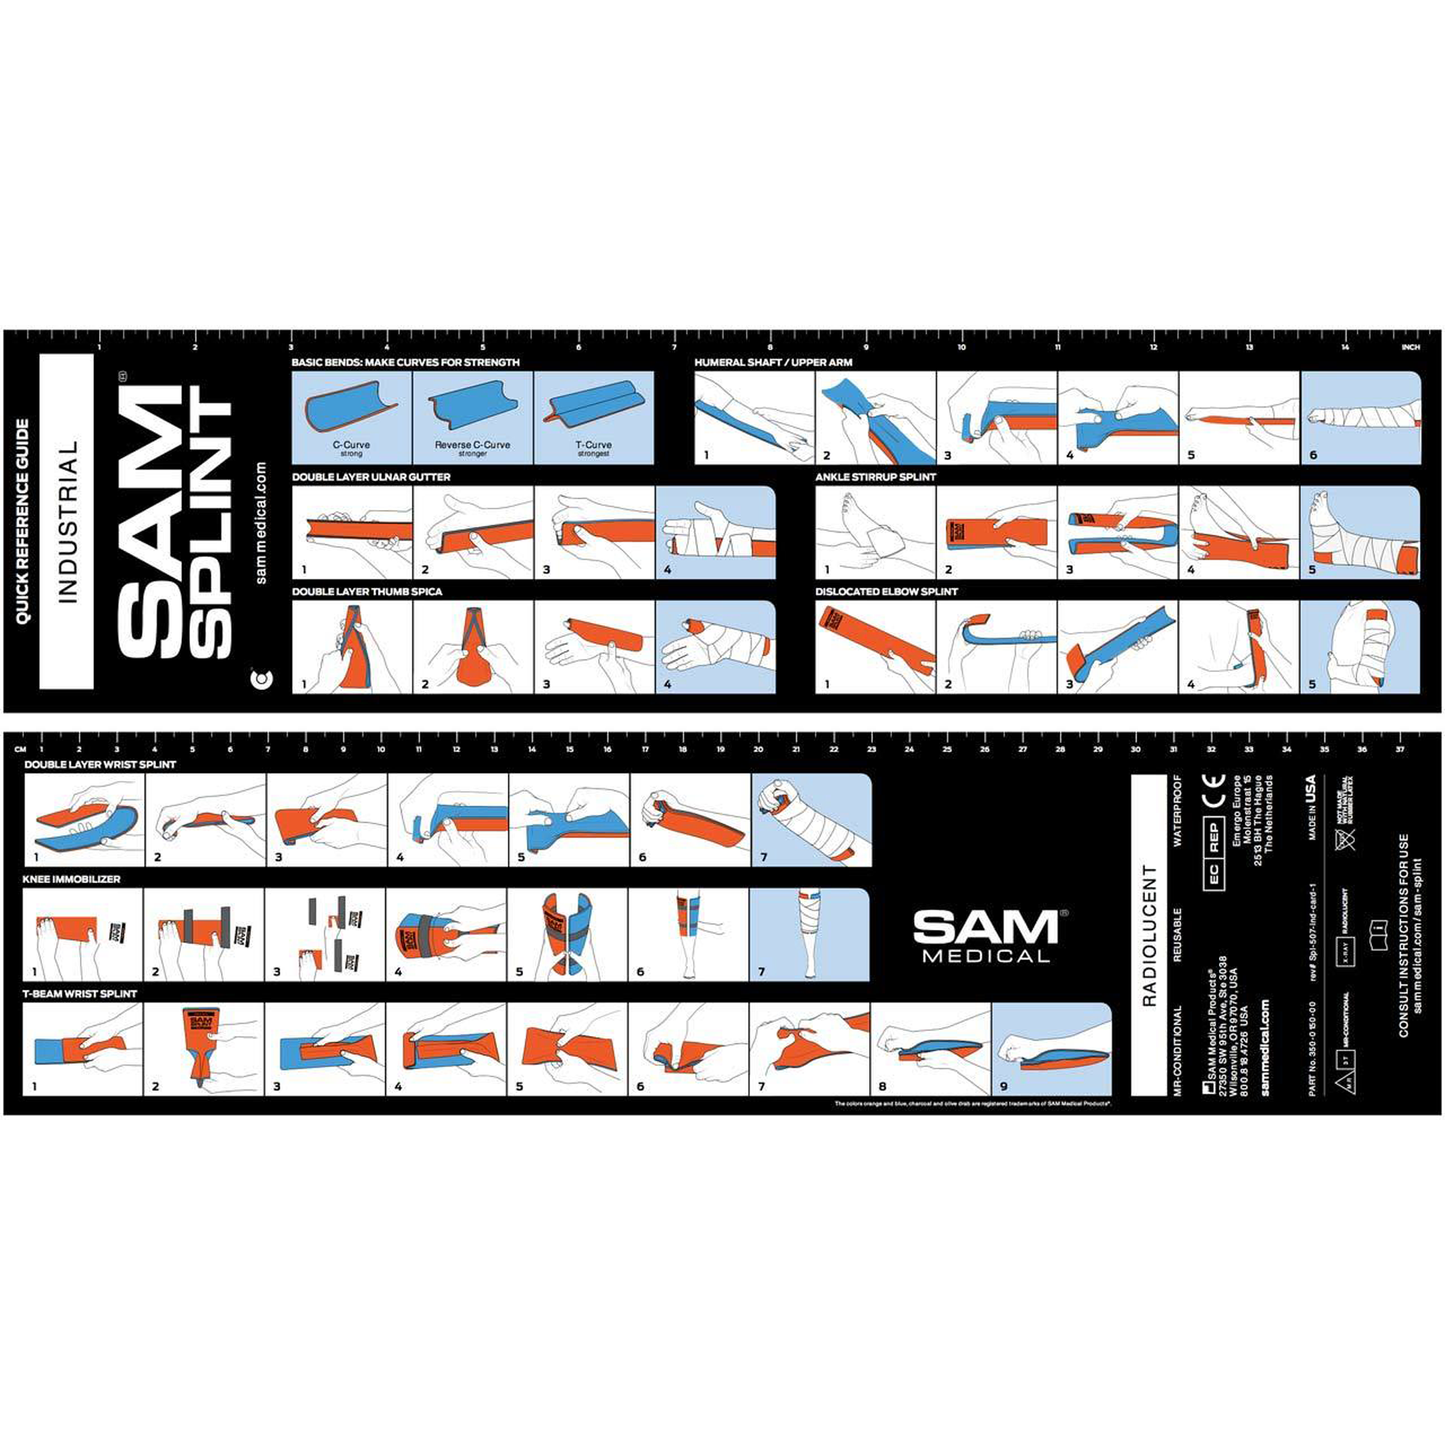 SAM® Splint 36" 91.4cm x 10.8cm Large Rolled - Charcoal